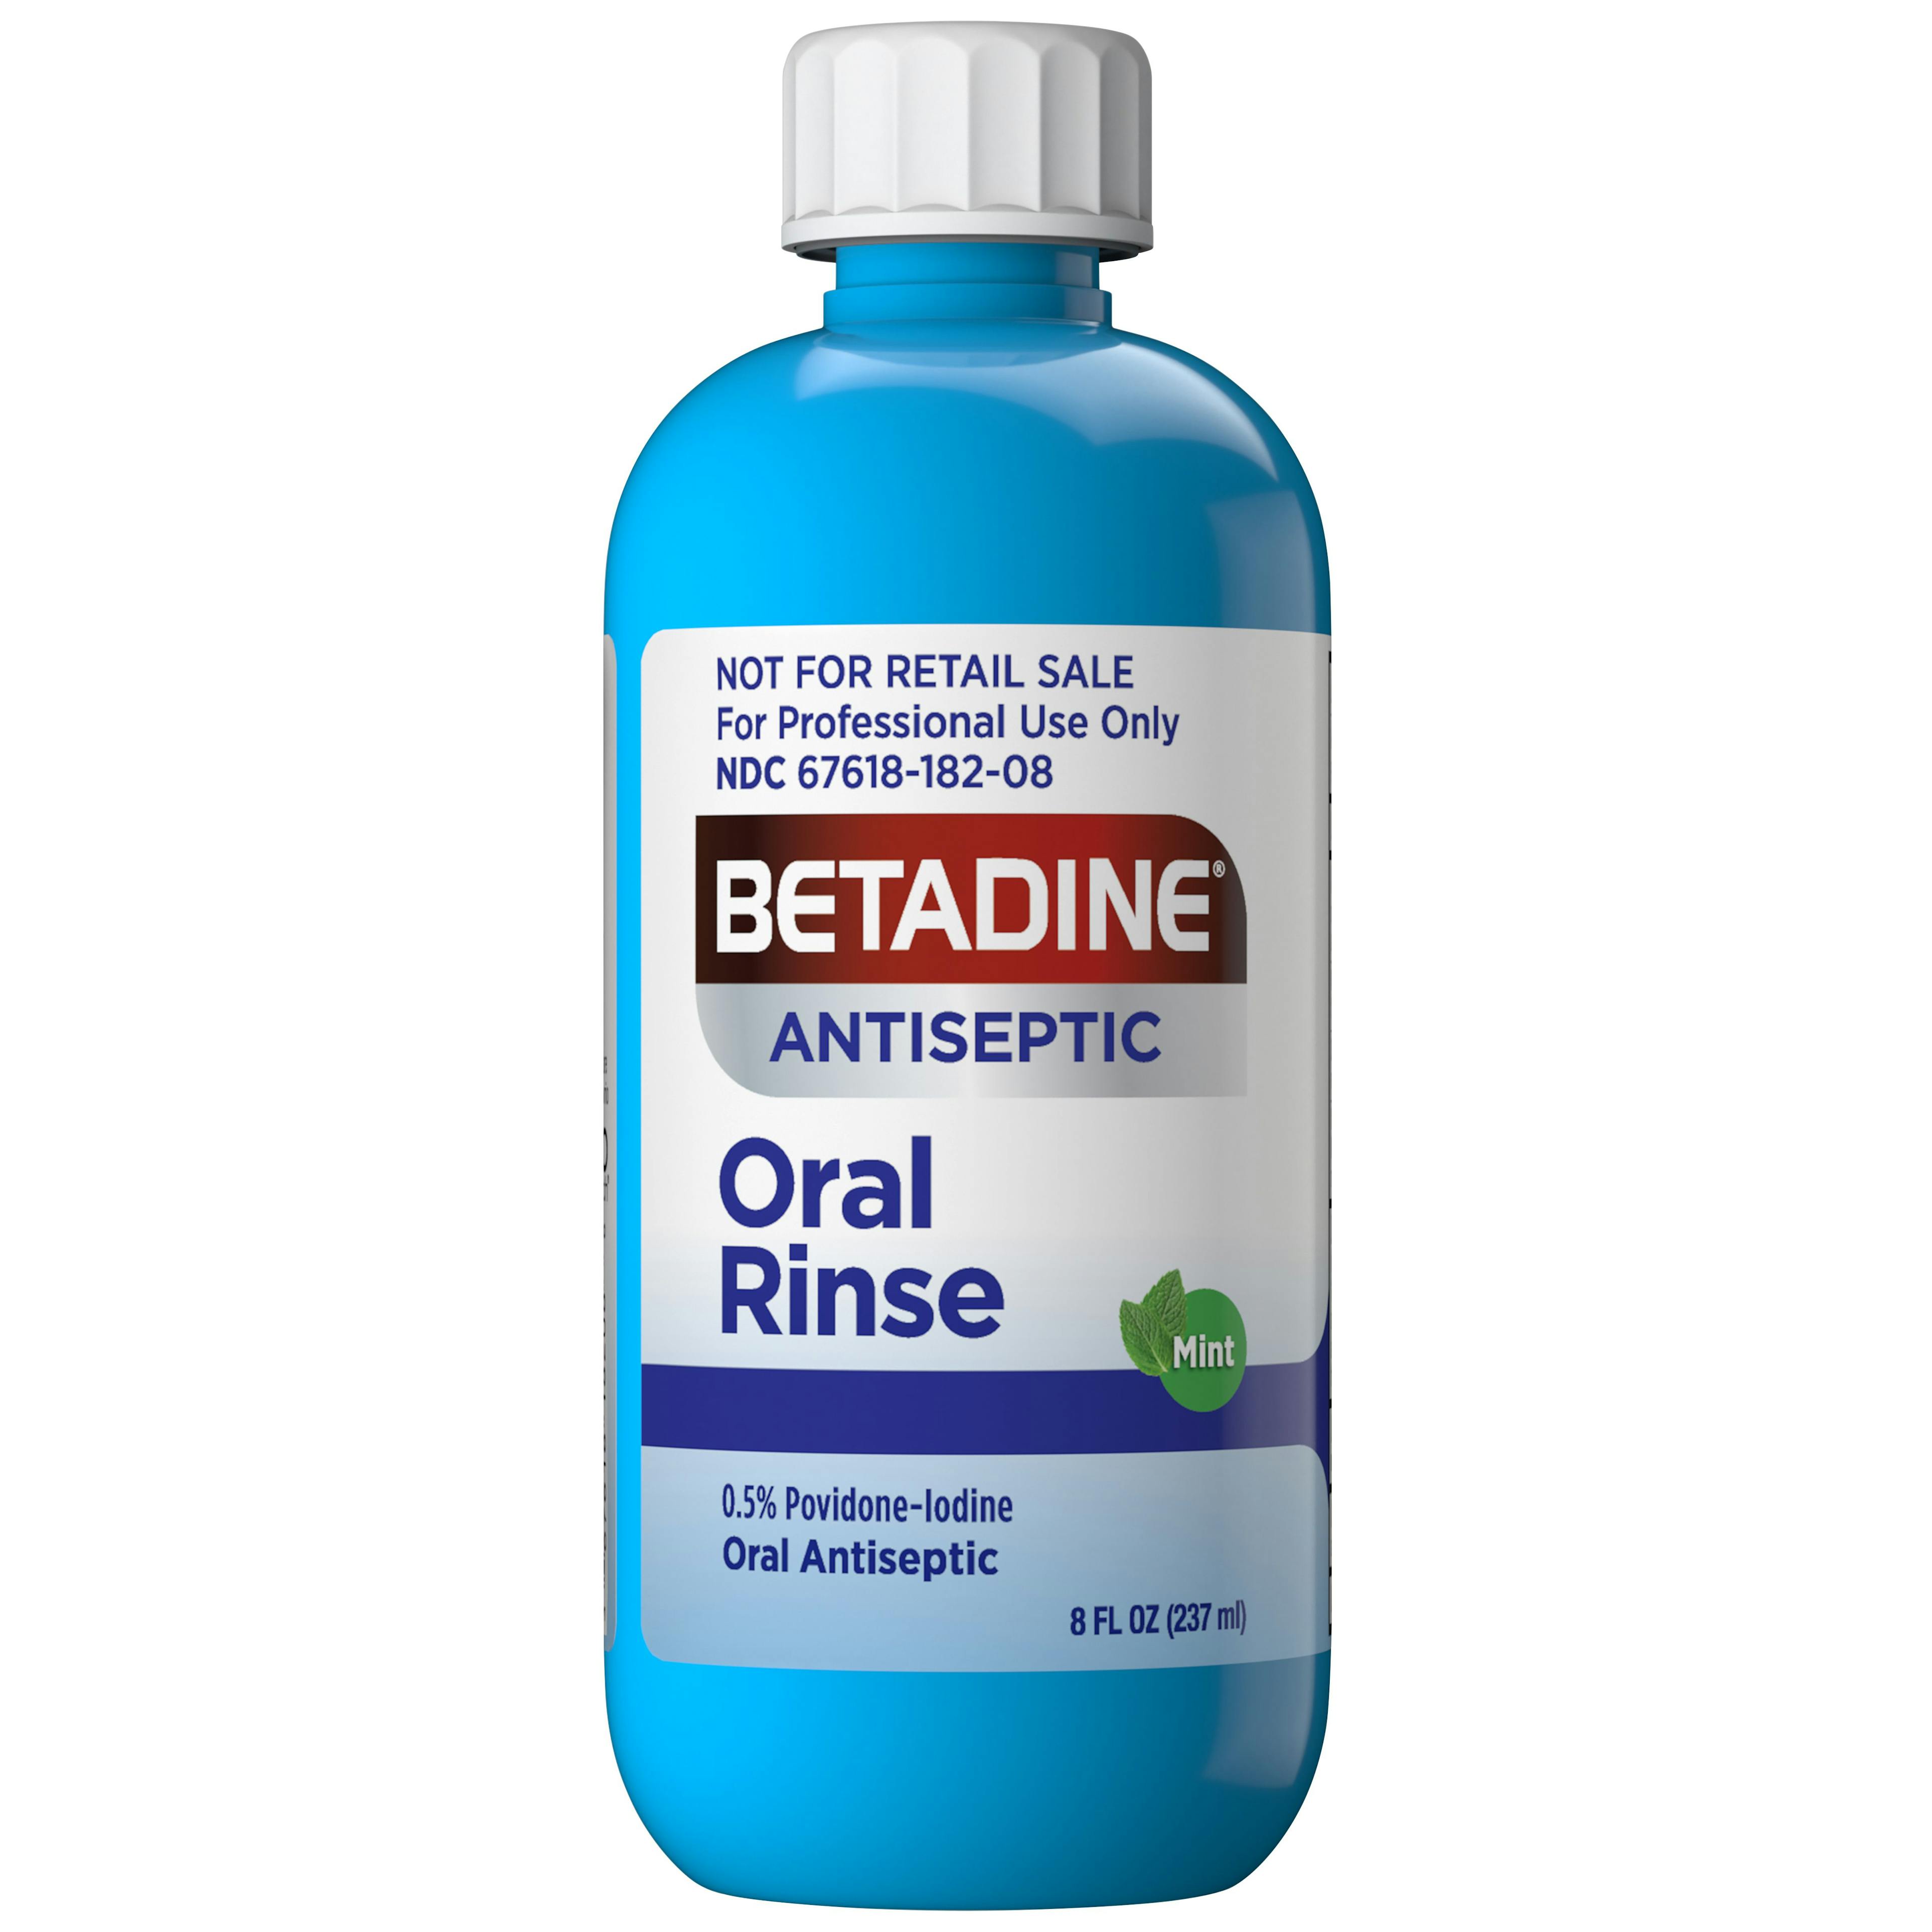 Betadine antiseptic oral rinse